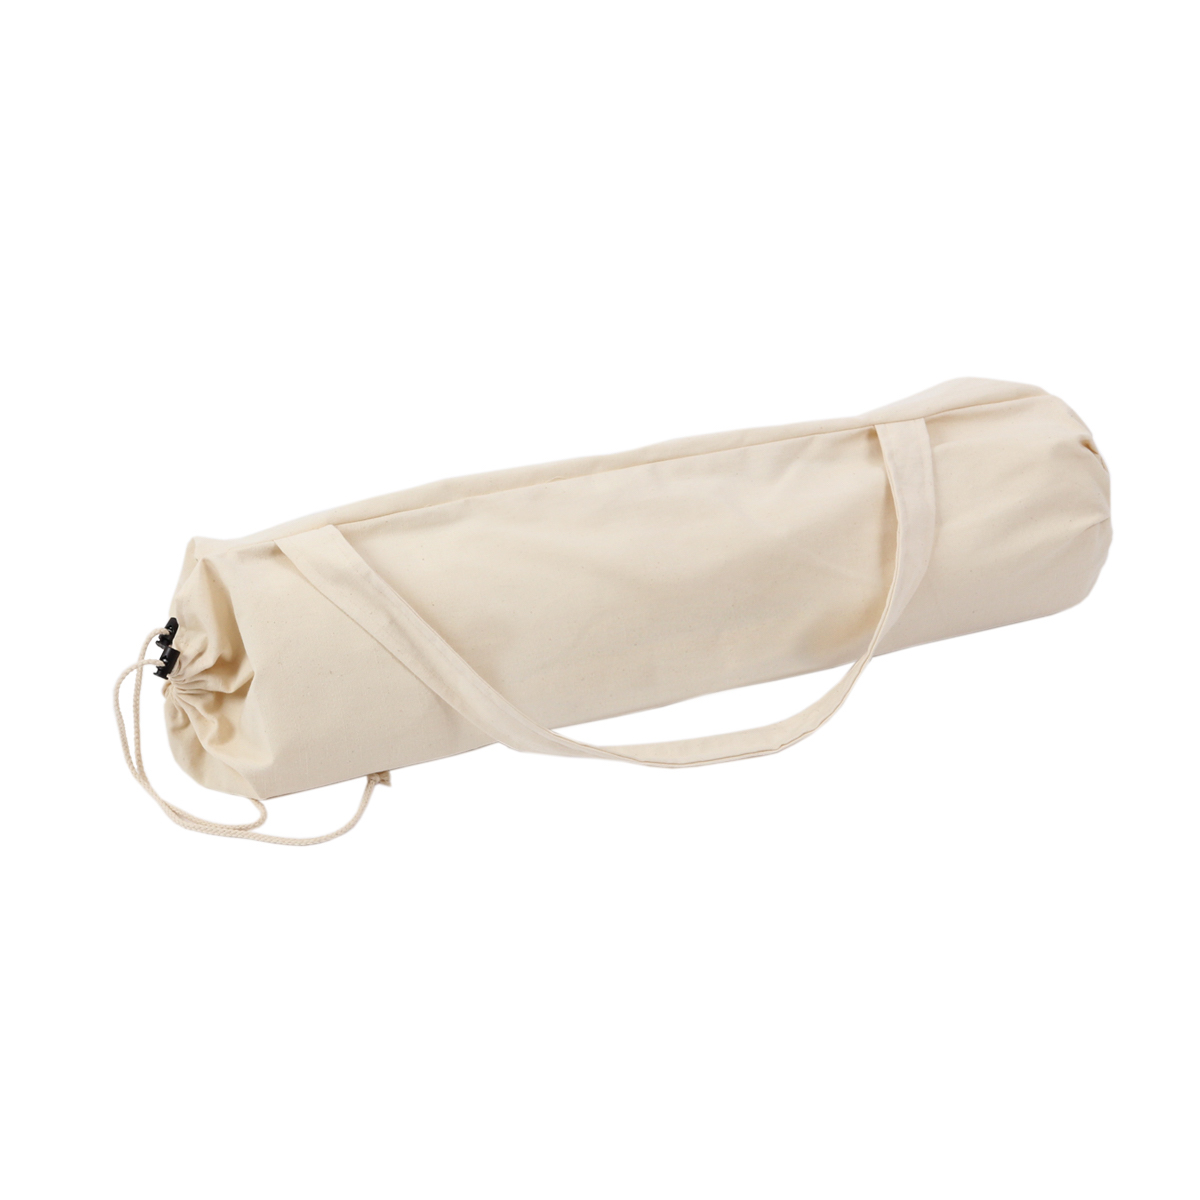 Carry bag for yoga mat